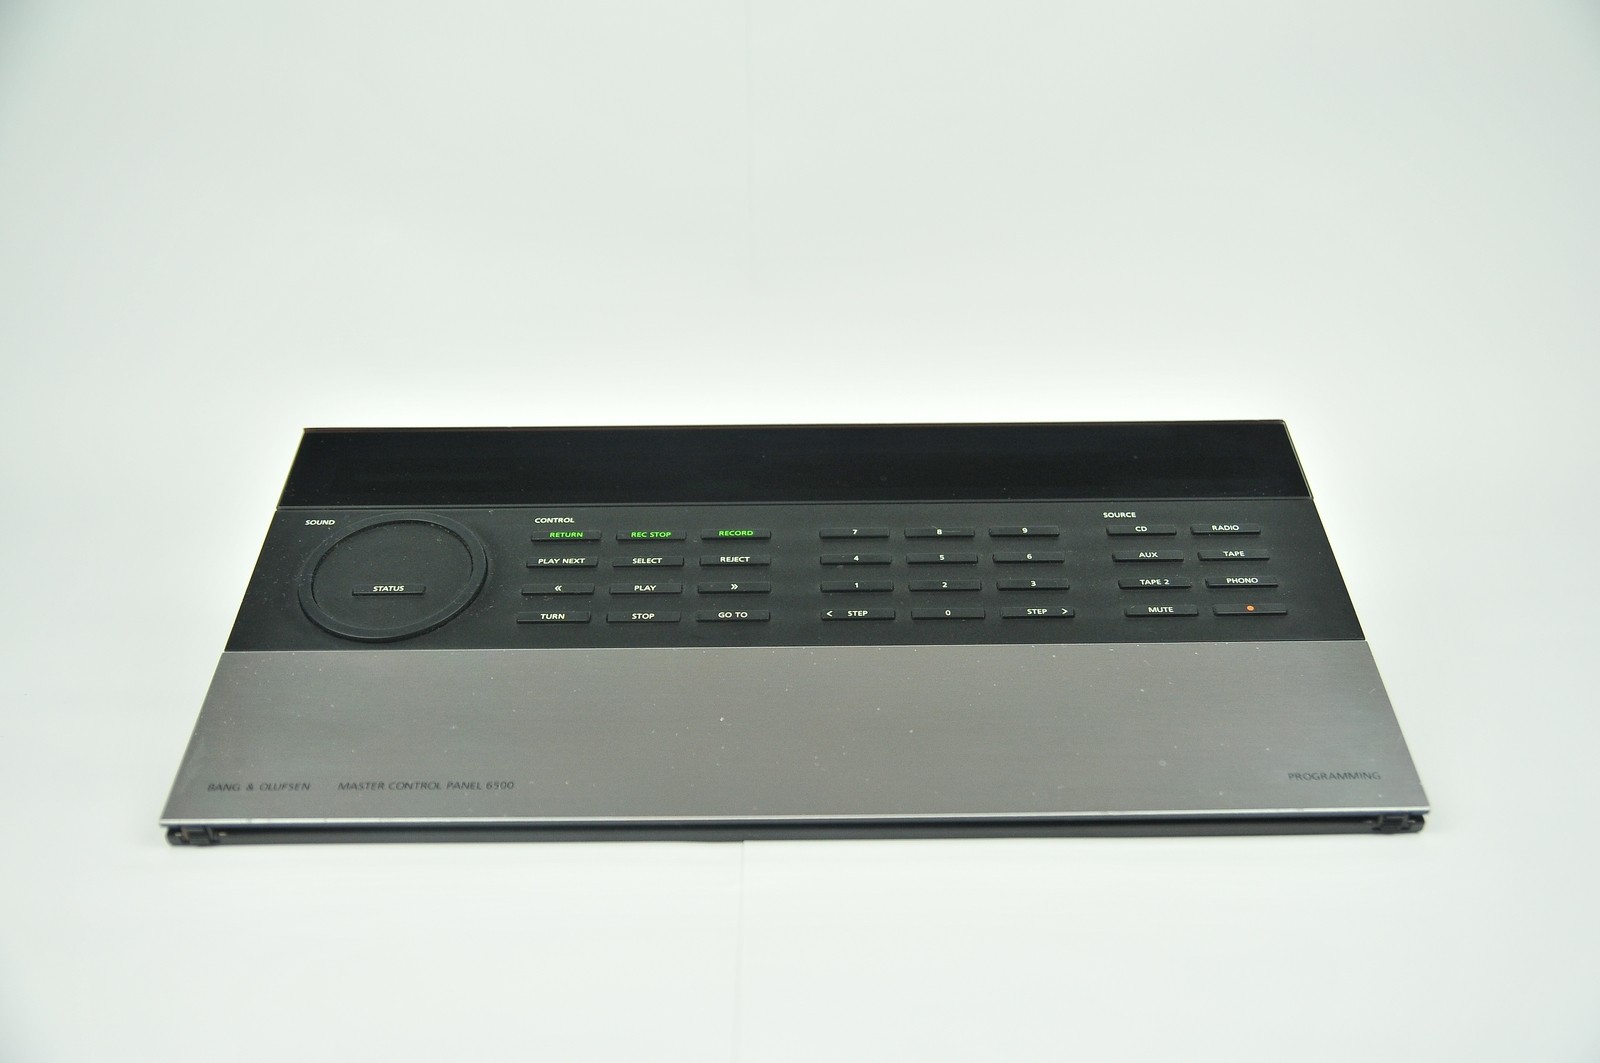 Gedehams frugtbart fordel Bang & Olufsen 6500 master control panel - Vintage Hi-Fi Audio Systems